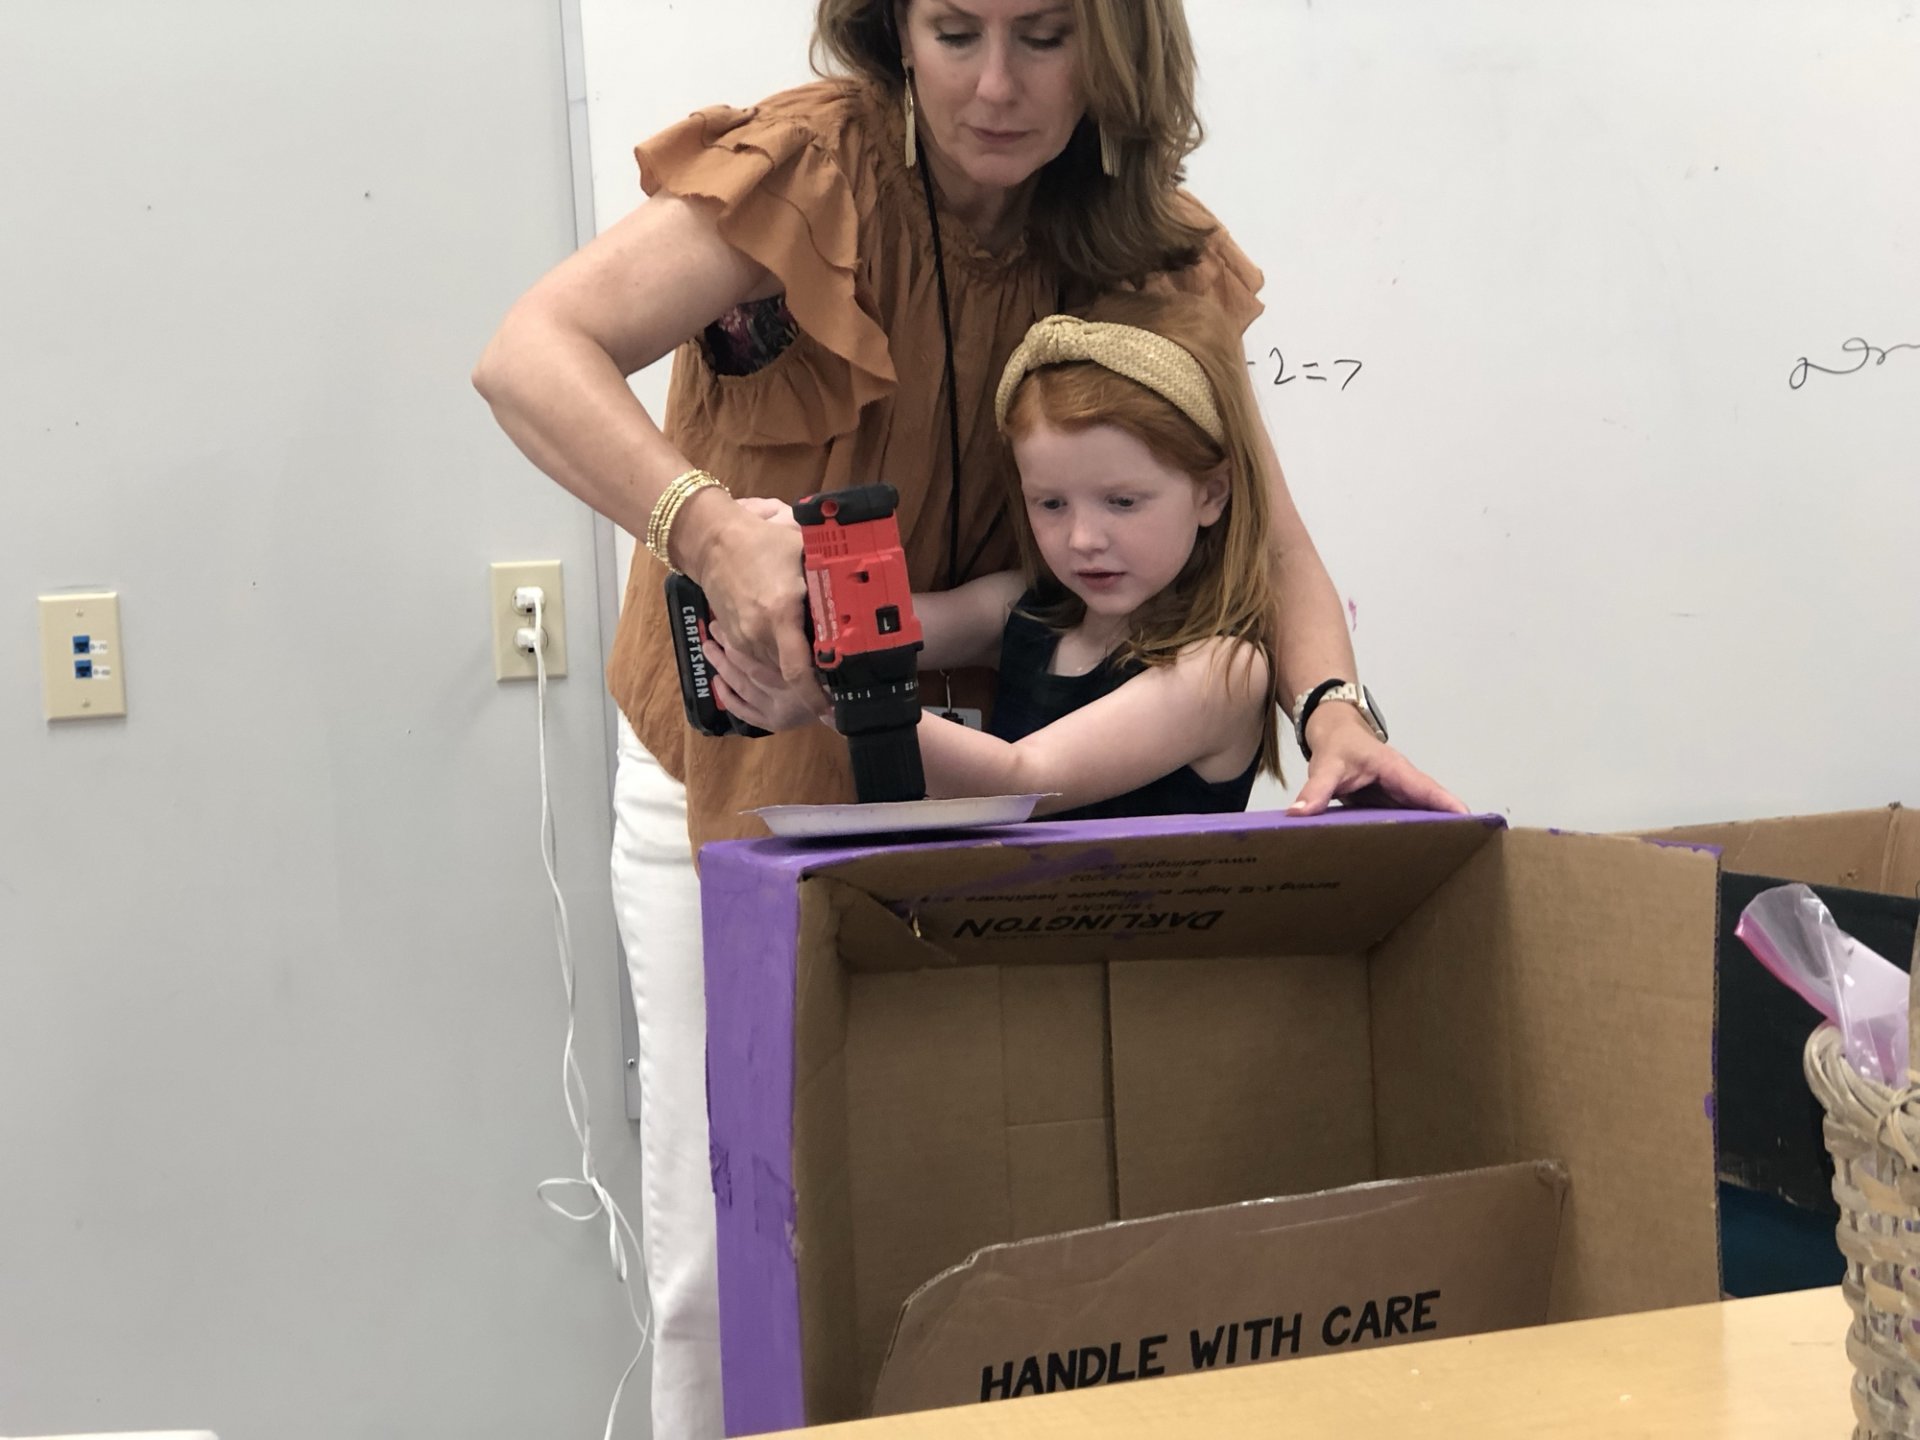 Kindergarten student with cardboard car